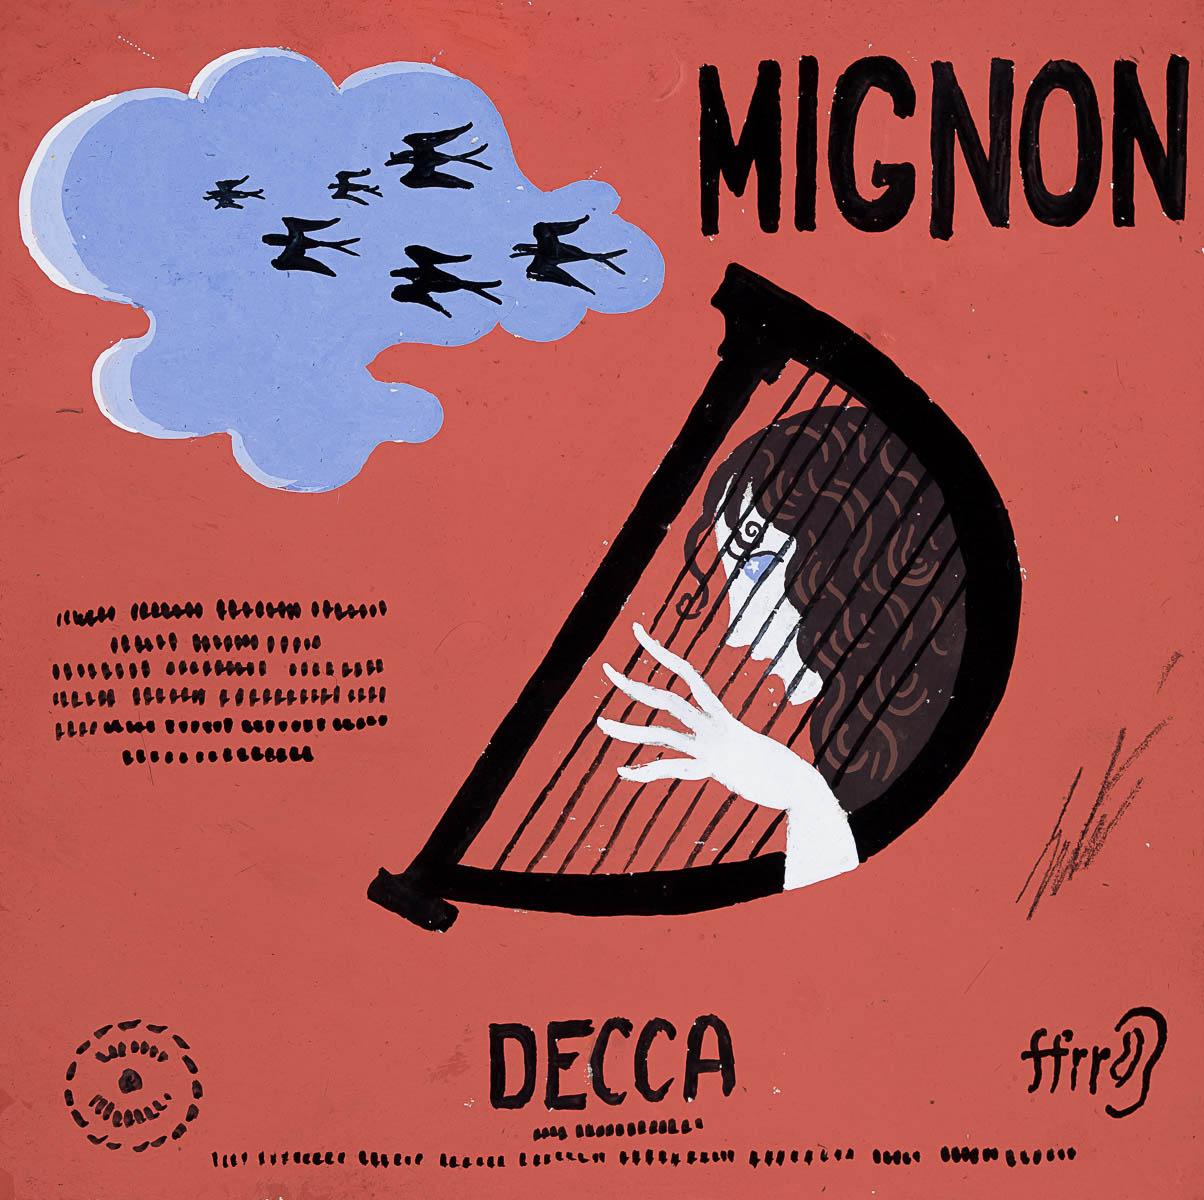 "Mignon" Decca design